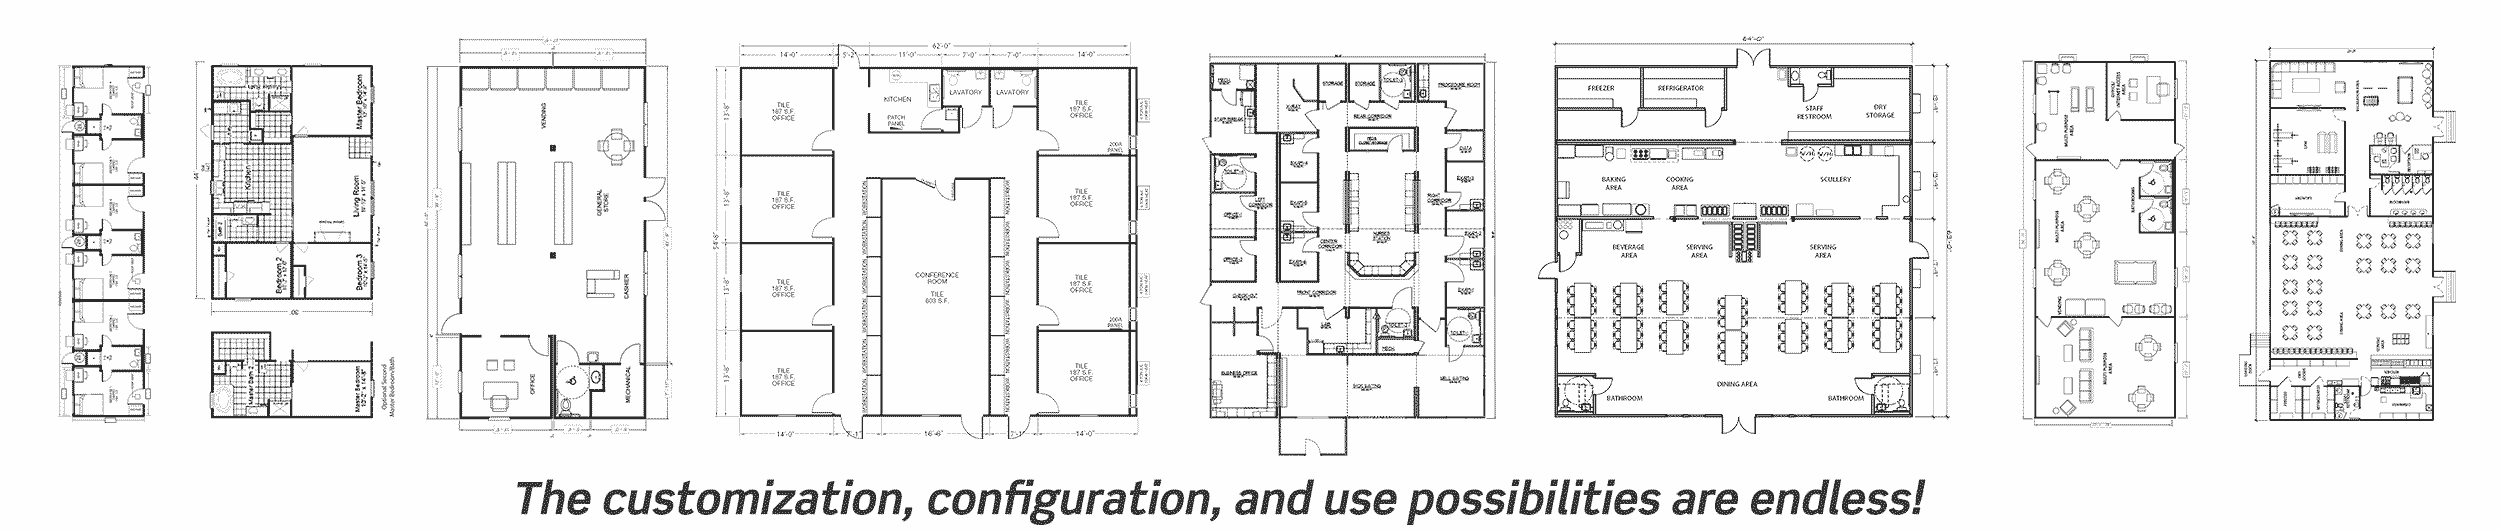 Sample Floorplan image strip